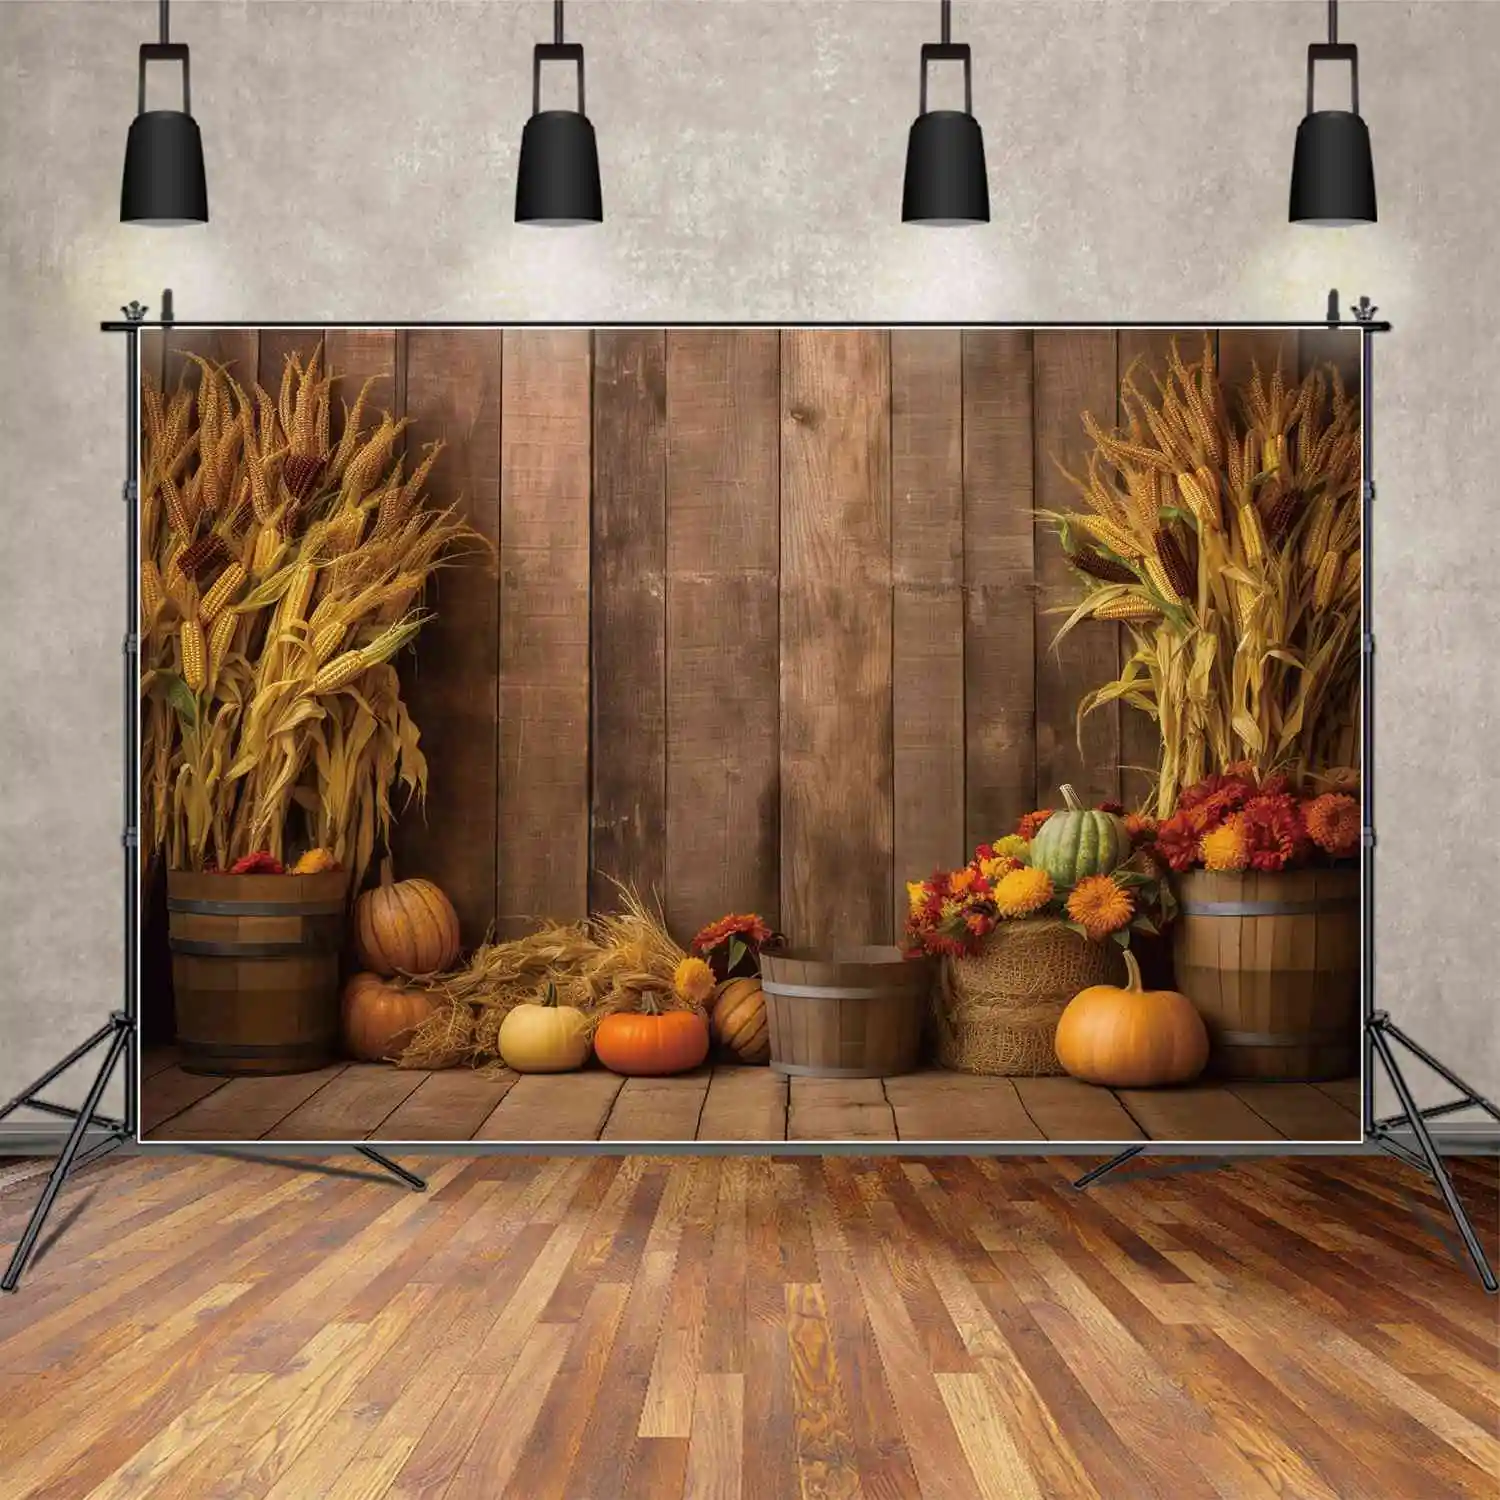 

MOON.QG Backdrop Children Autumn Wood Plank Wall Floor Background Thanksgiving Party Props Corn Pumpkin Flower Board Photo Booth